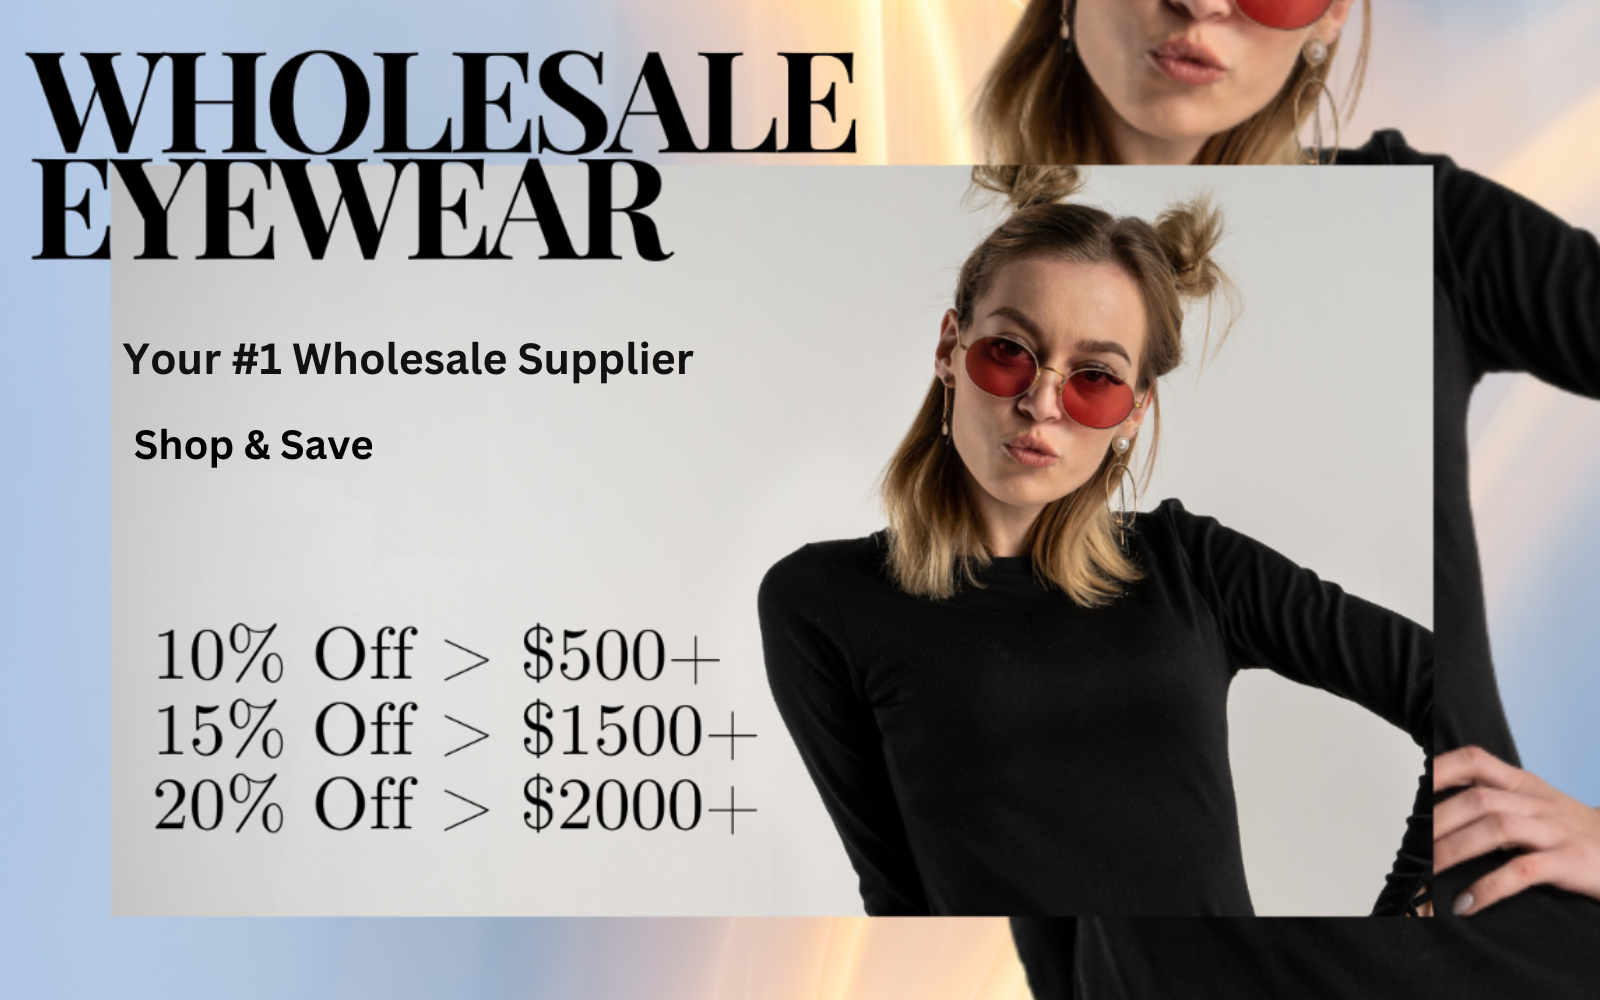 Luxury Square Wholesale Sunglasses For Men And Women Full Frame